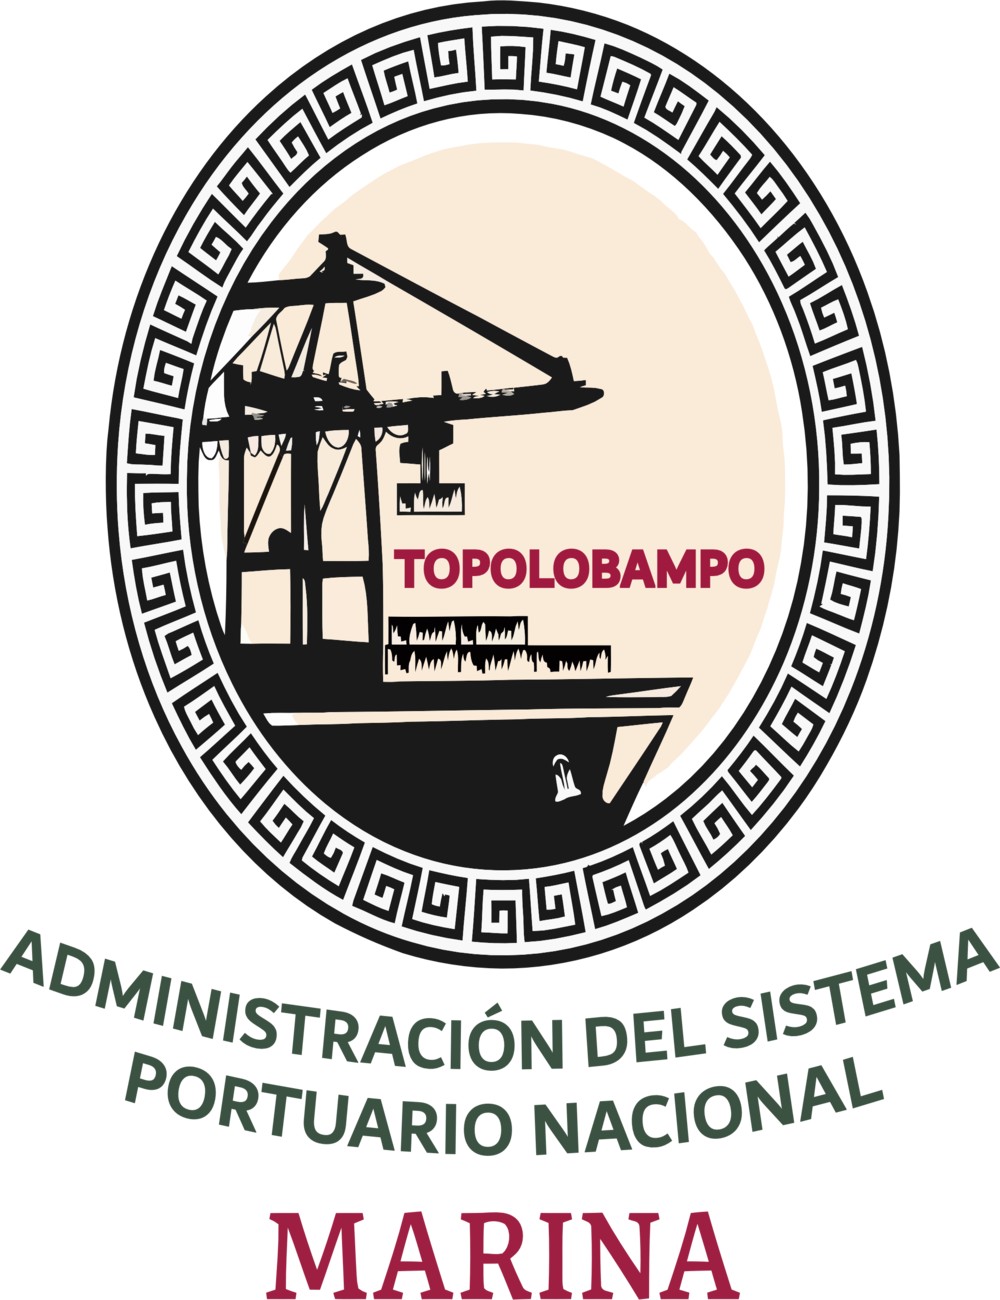 Topolobampo port microsite